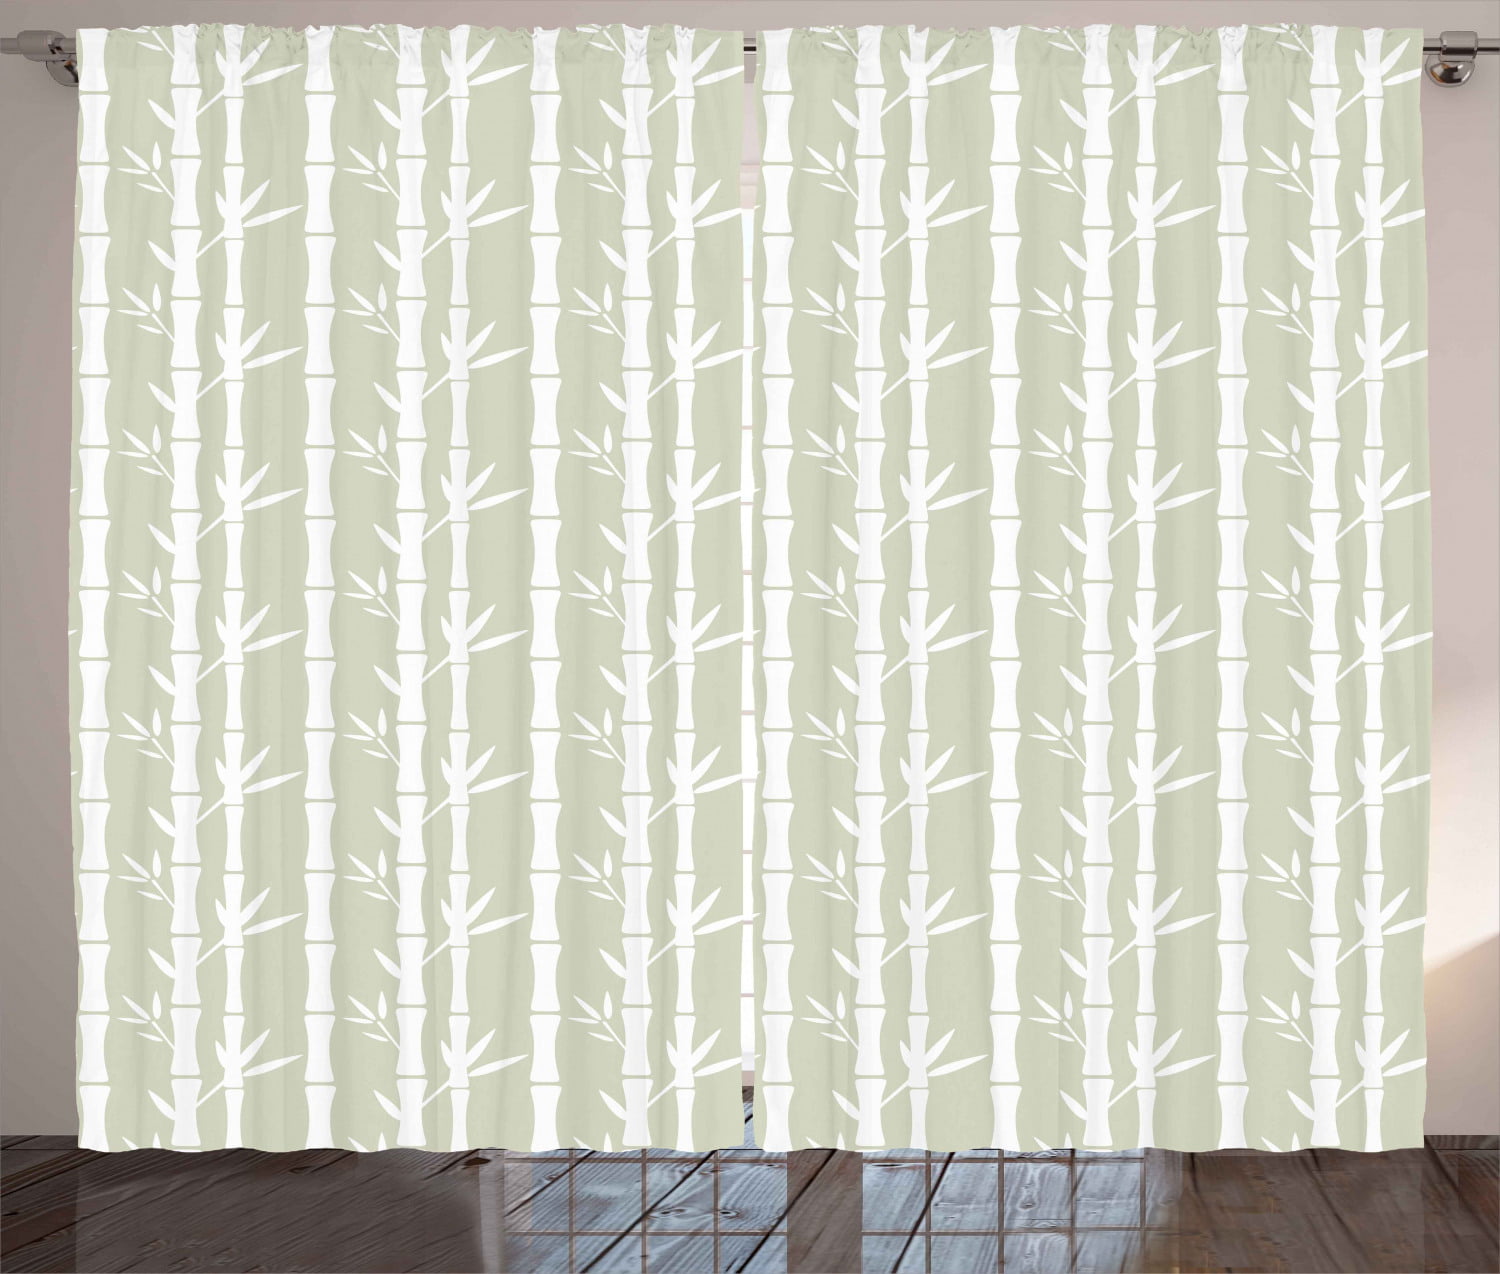 Bamboo Garden template 3D Curtains Blockout Photo Printing Curtains Drape Fabric 